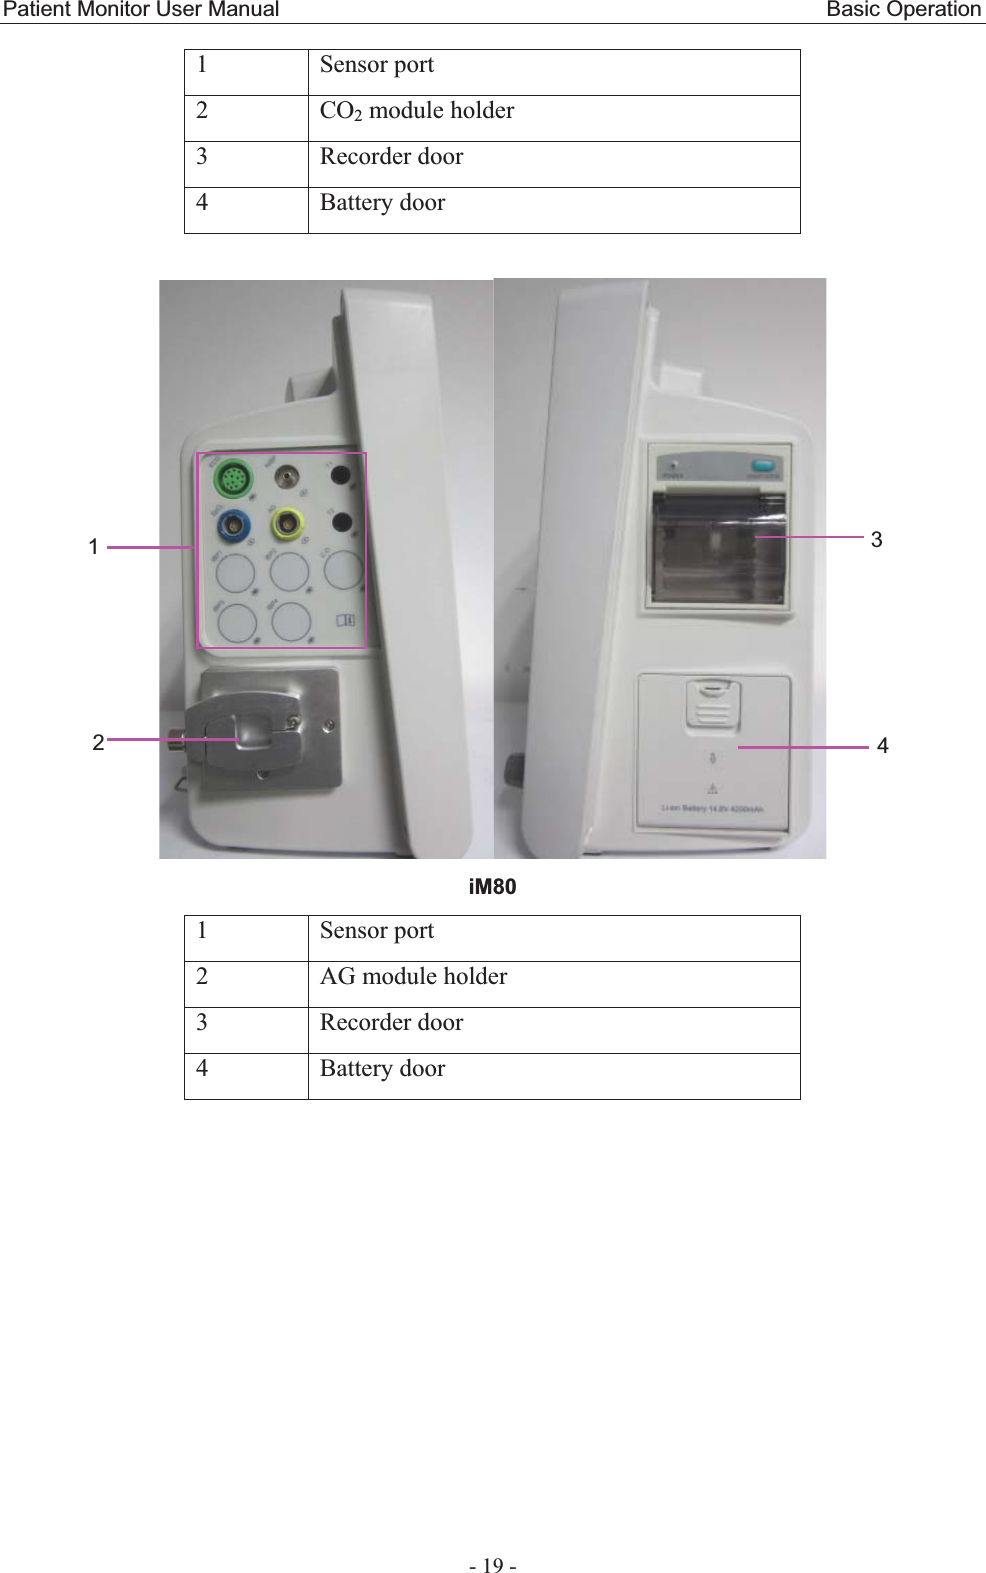 Patient Monitor User Manual                                                  Basic Operation  - 19 - 1 Sensor port 2 CO2 module holder 3 Recorder door 4 Battery door  iM801 Sensor port 2  AG module holder 3 Recorder door 4 Battery door 1234